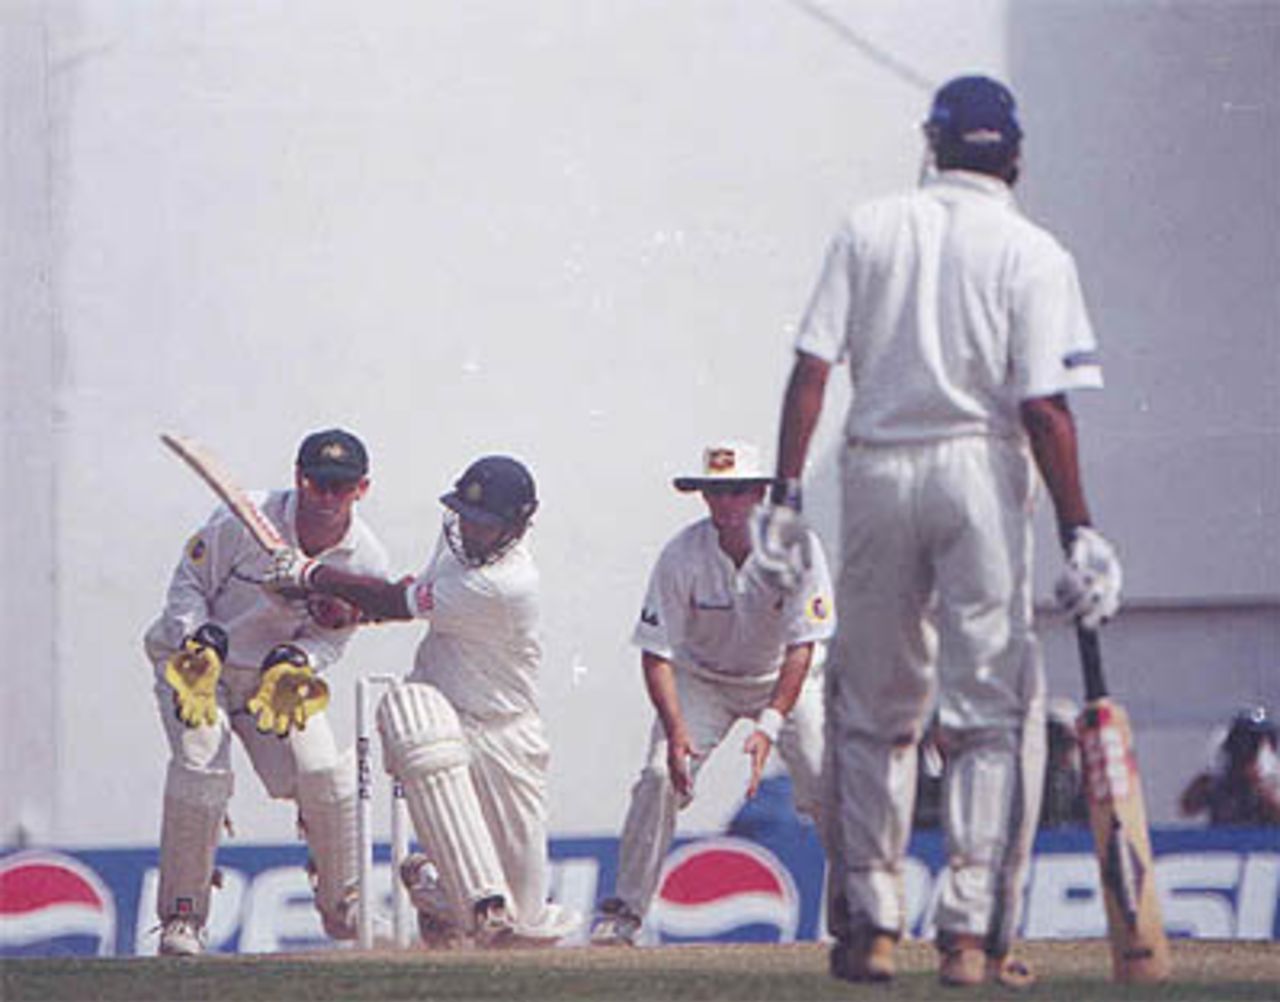 Ramesh sweeps en route to a pleasing 101, Australia in India, 2000/01, India 'A' v Australians, Vidarbha C.A. Ground, Nagpur, 17-19 February 2001 (Day 2).